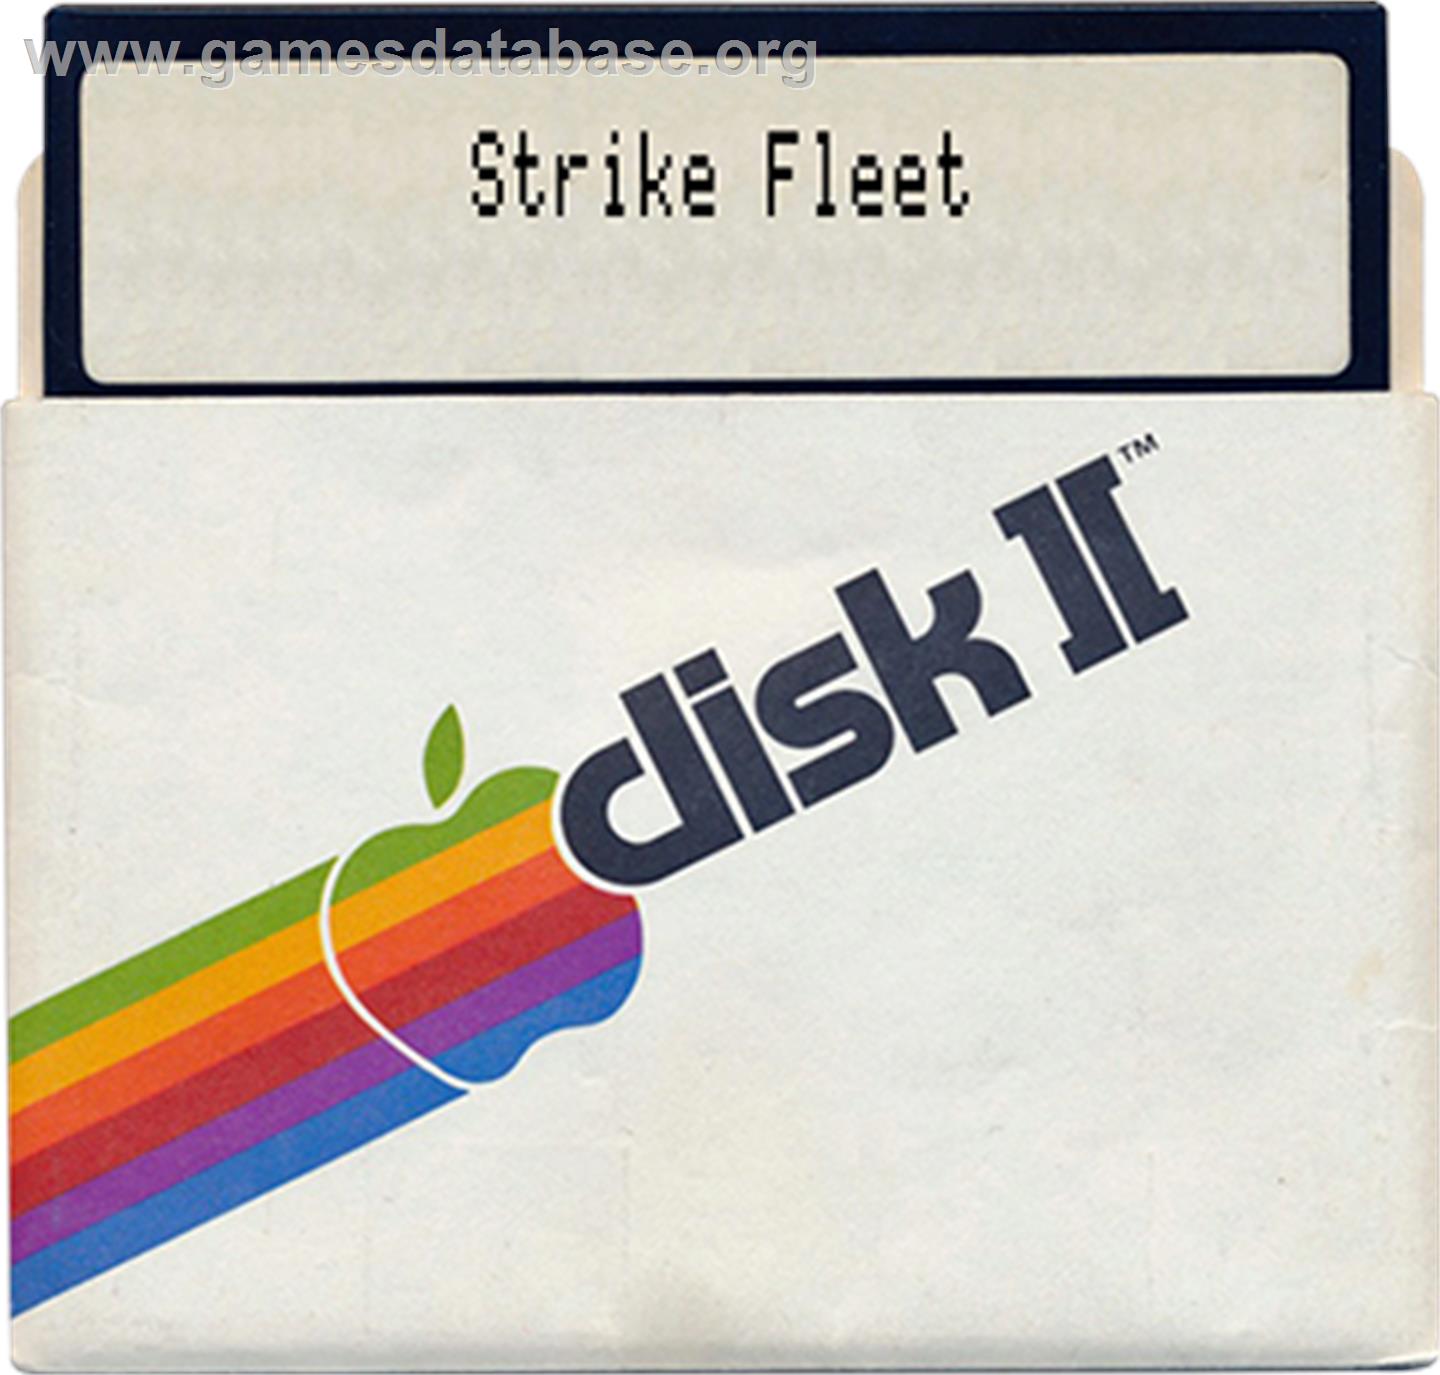 Strike Fleet - Apple II - Artwork - Disc